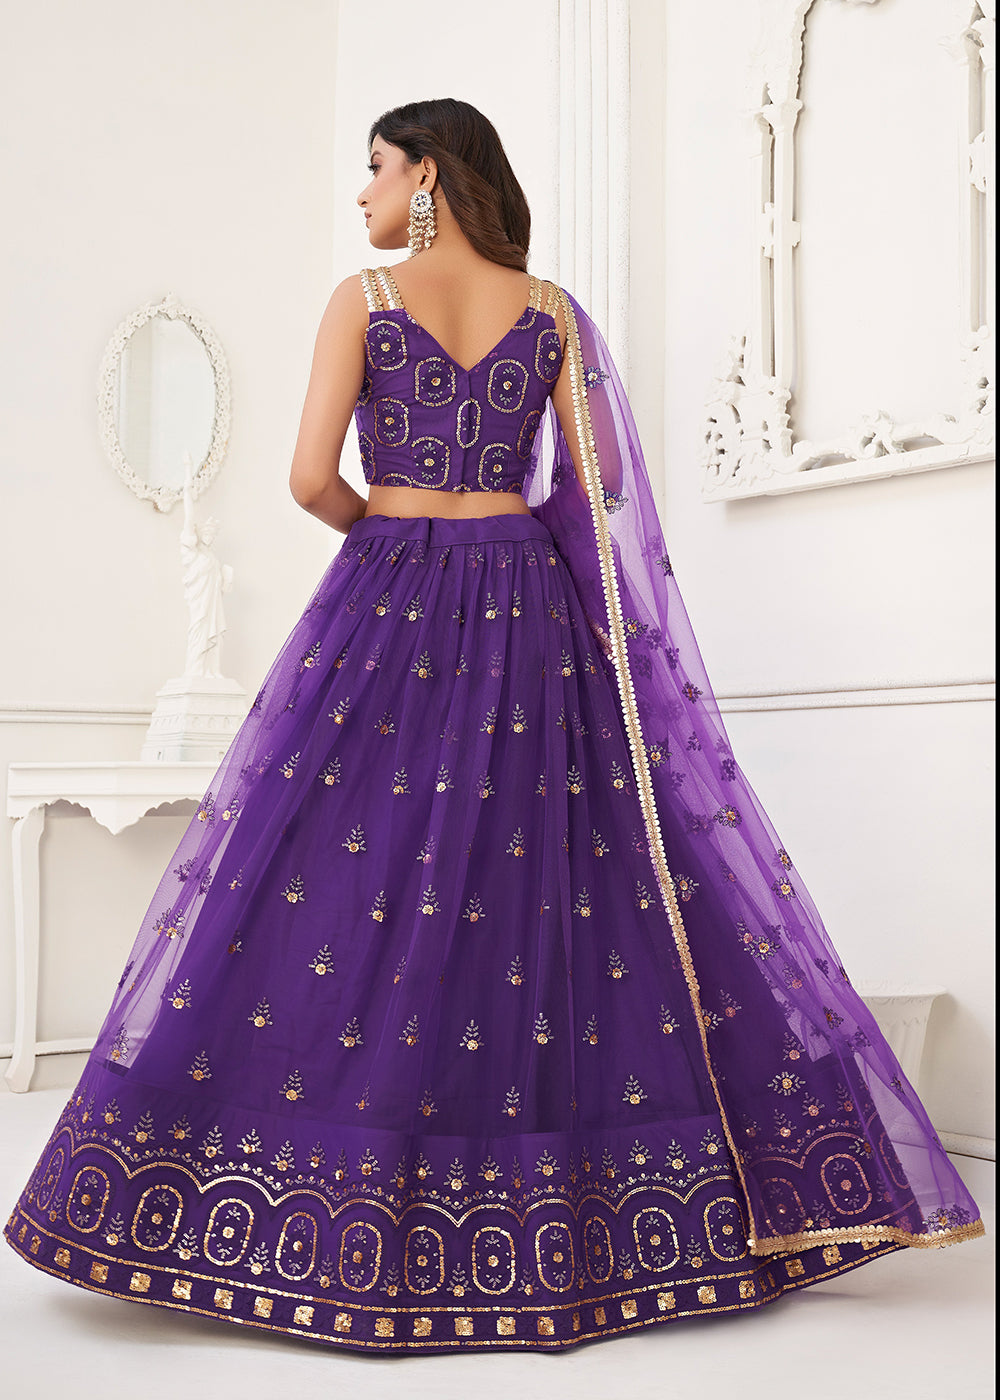 Buy Now Embroidered Net Purple Sangeet & Haldi Wedding Lehenga Choli Online in USA, UK, Canada & Worldwide at Empress Clothing.